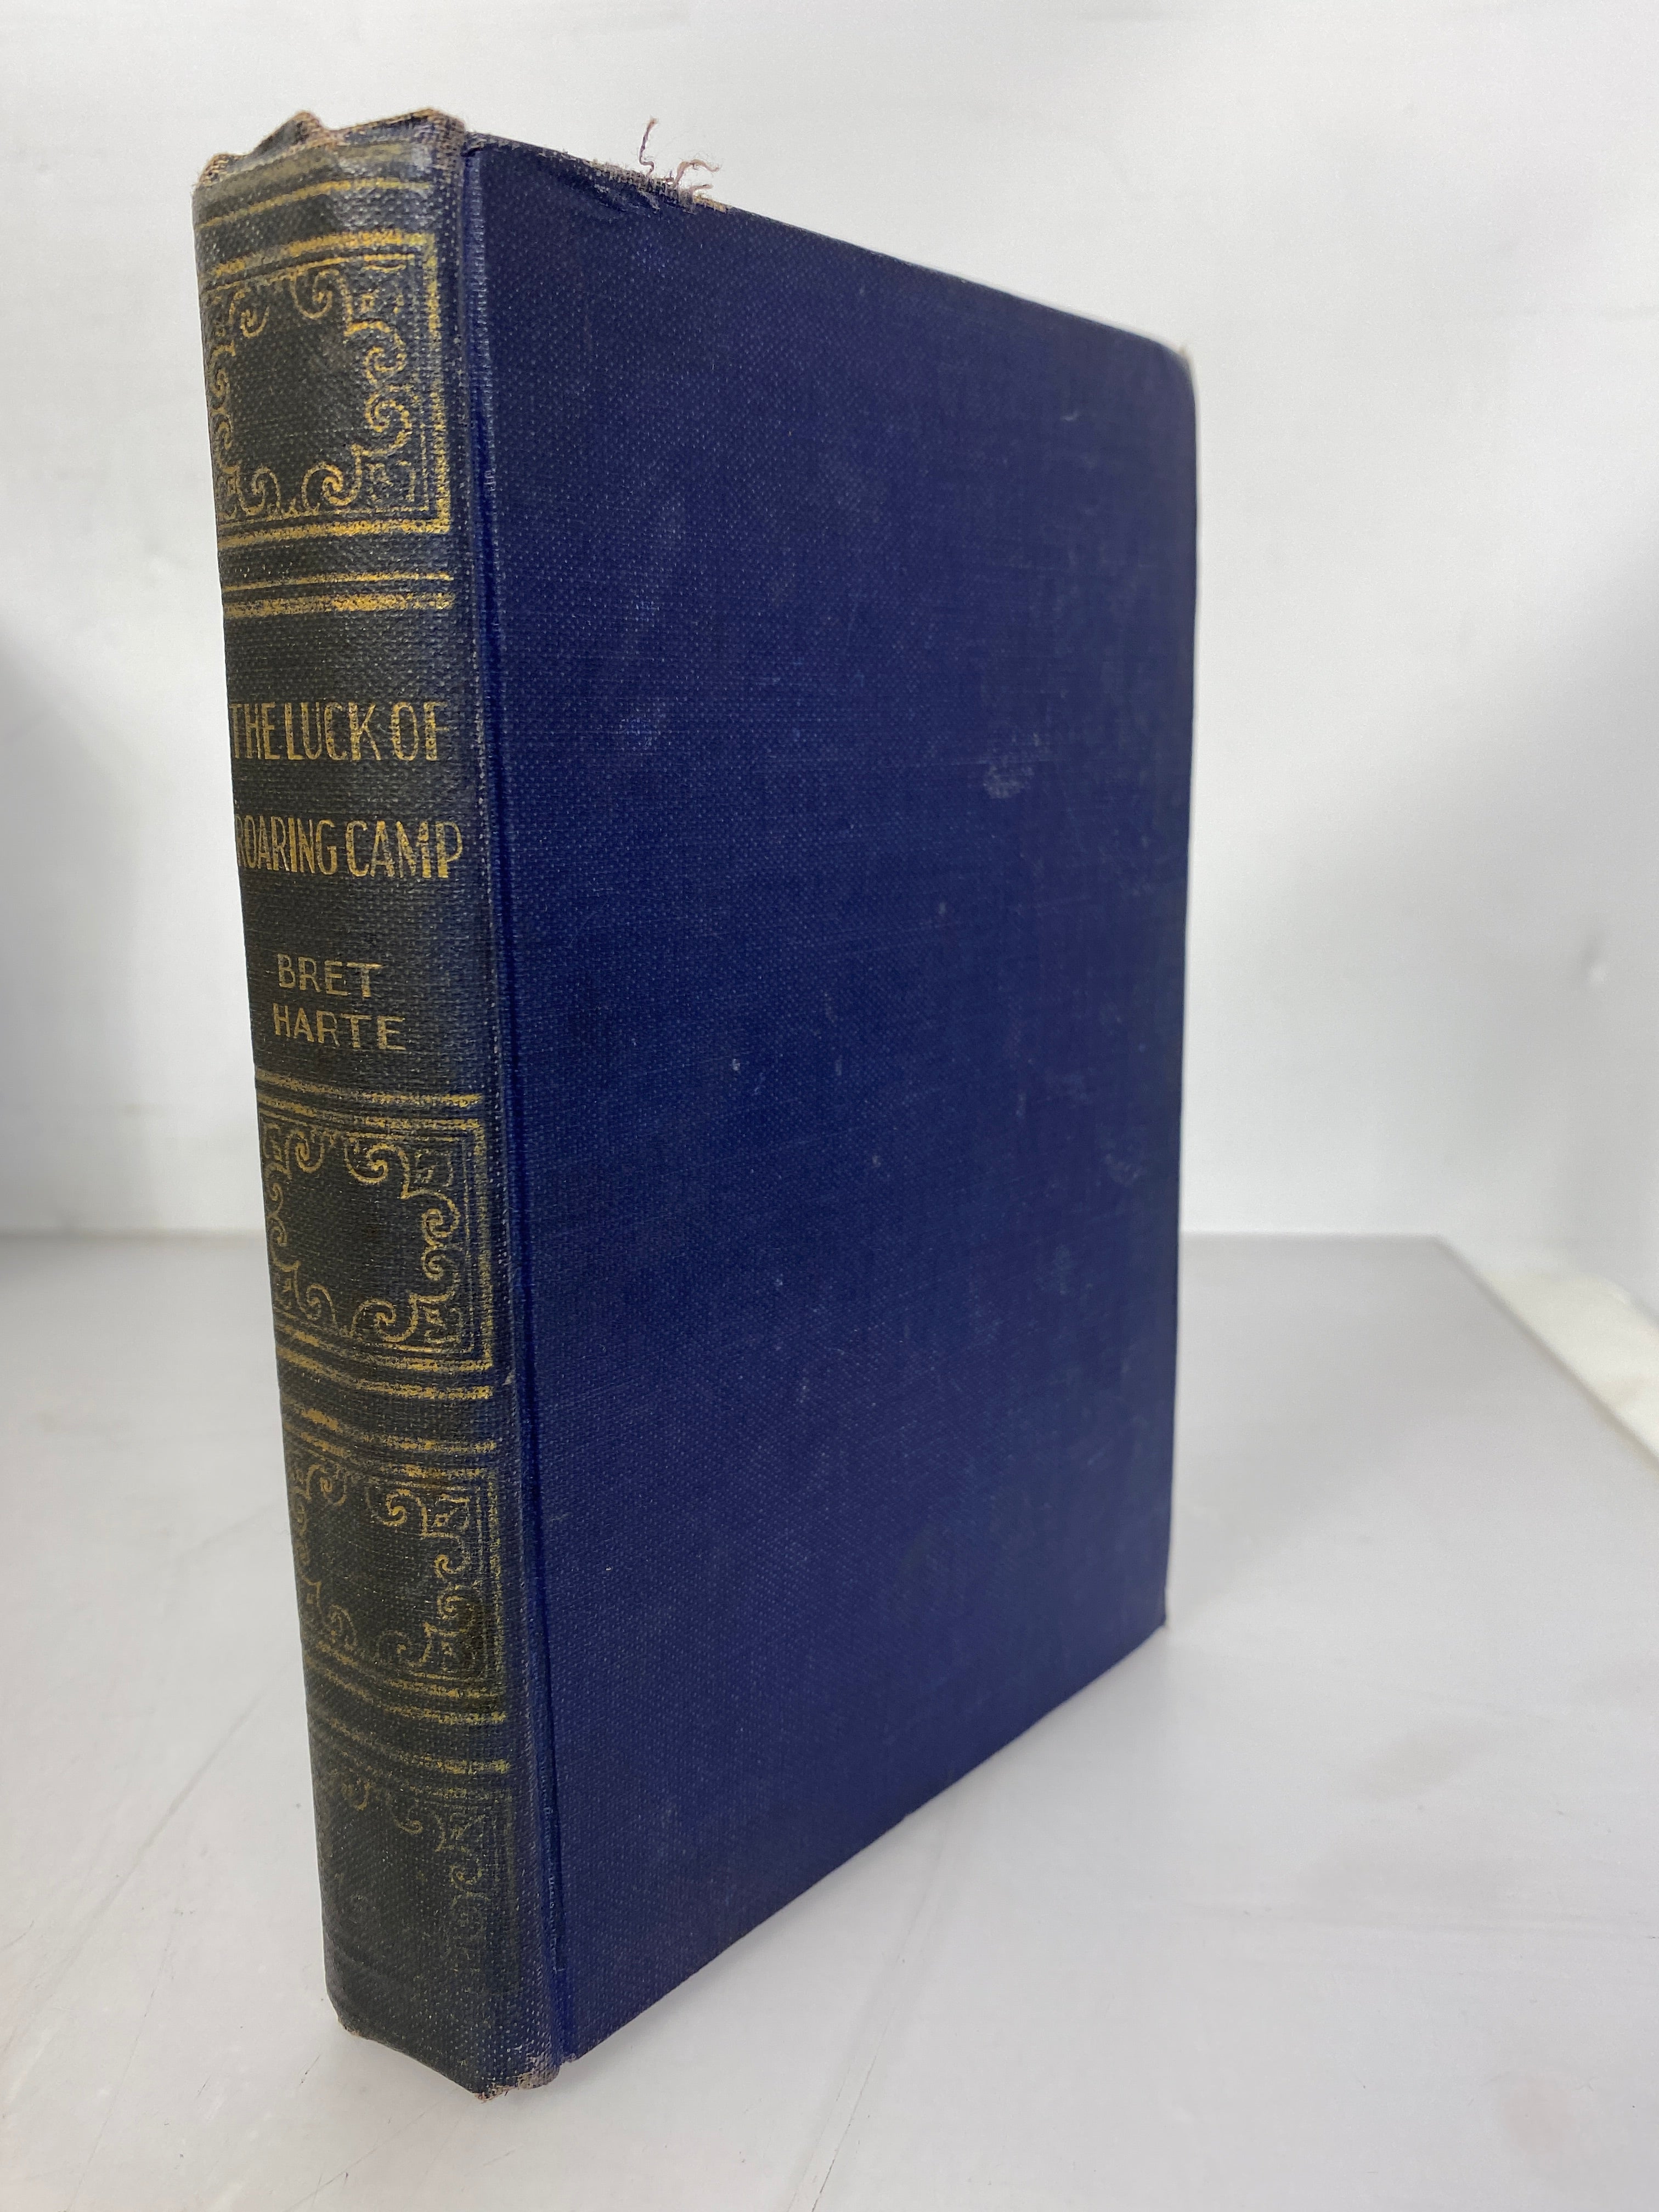 Lot of 16 Vintage World's Popular Classics Art Type Edition Tennyson Kipling HC